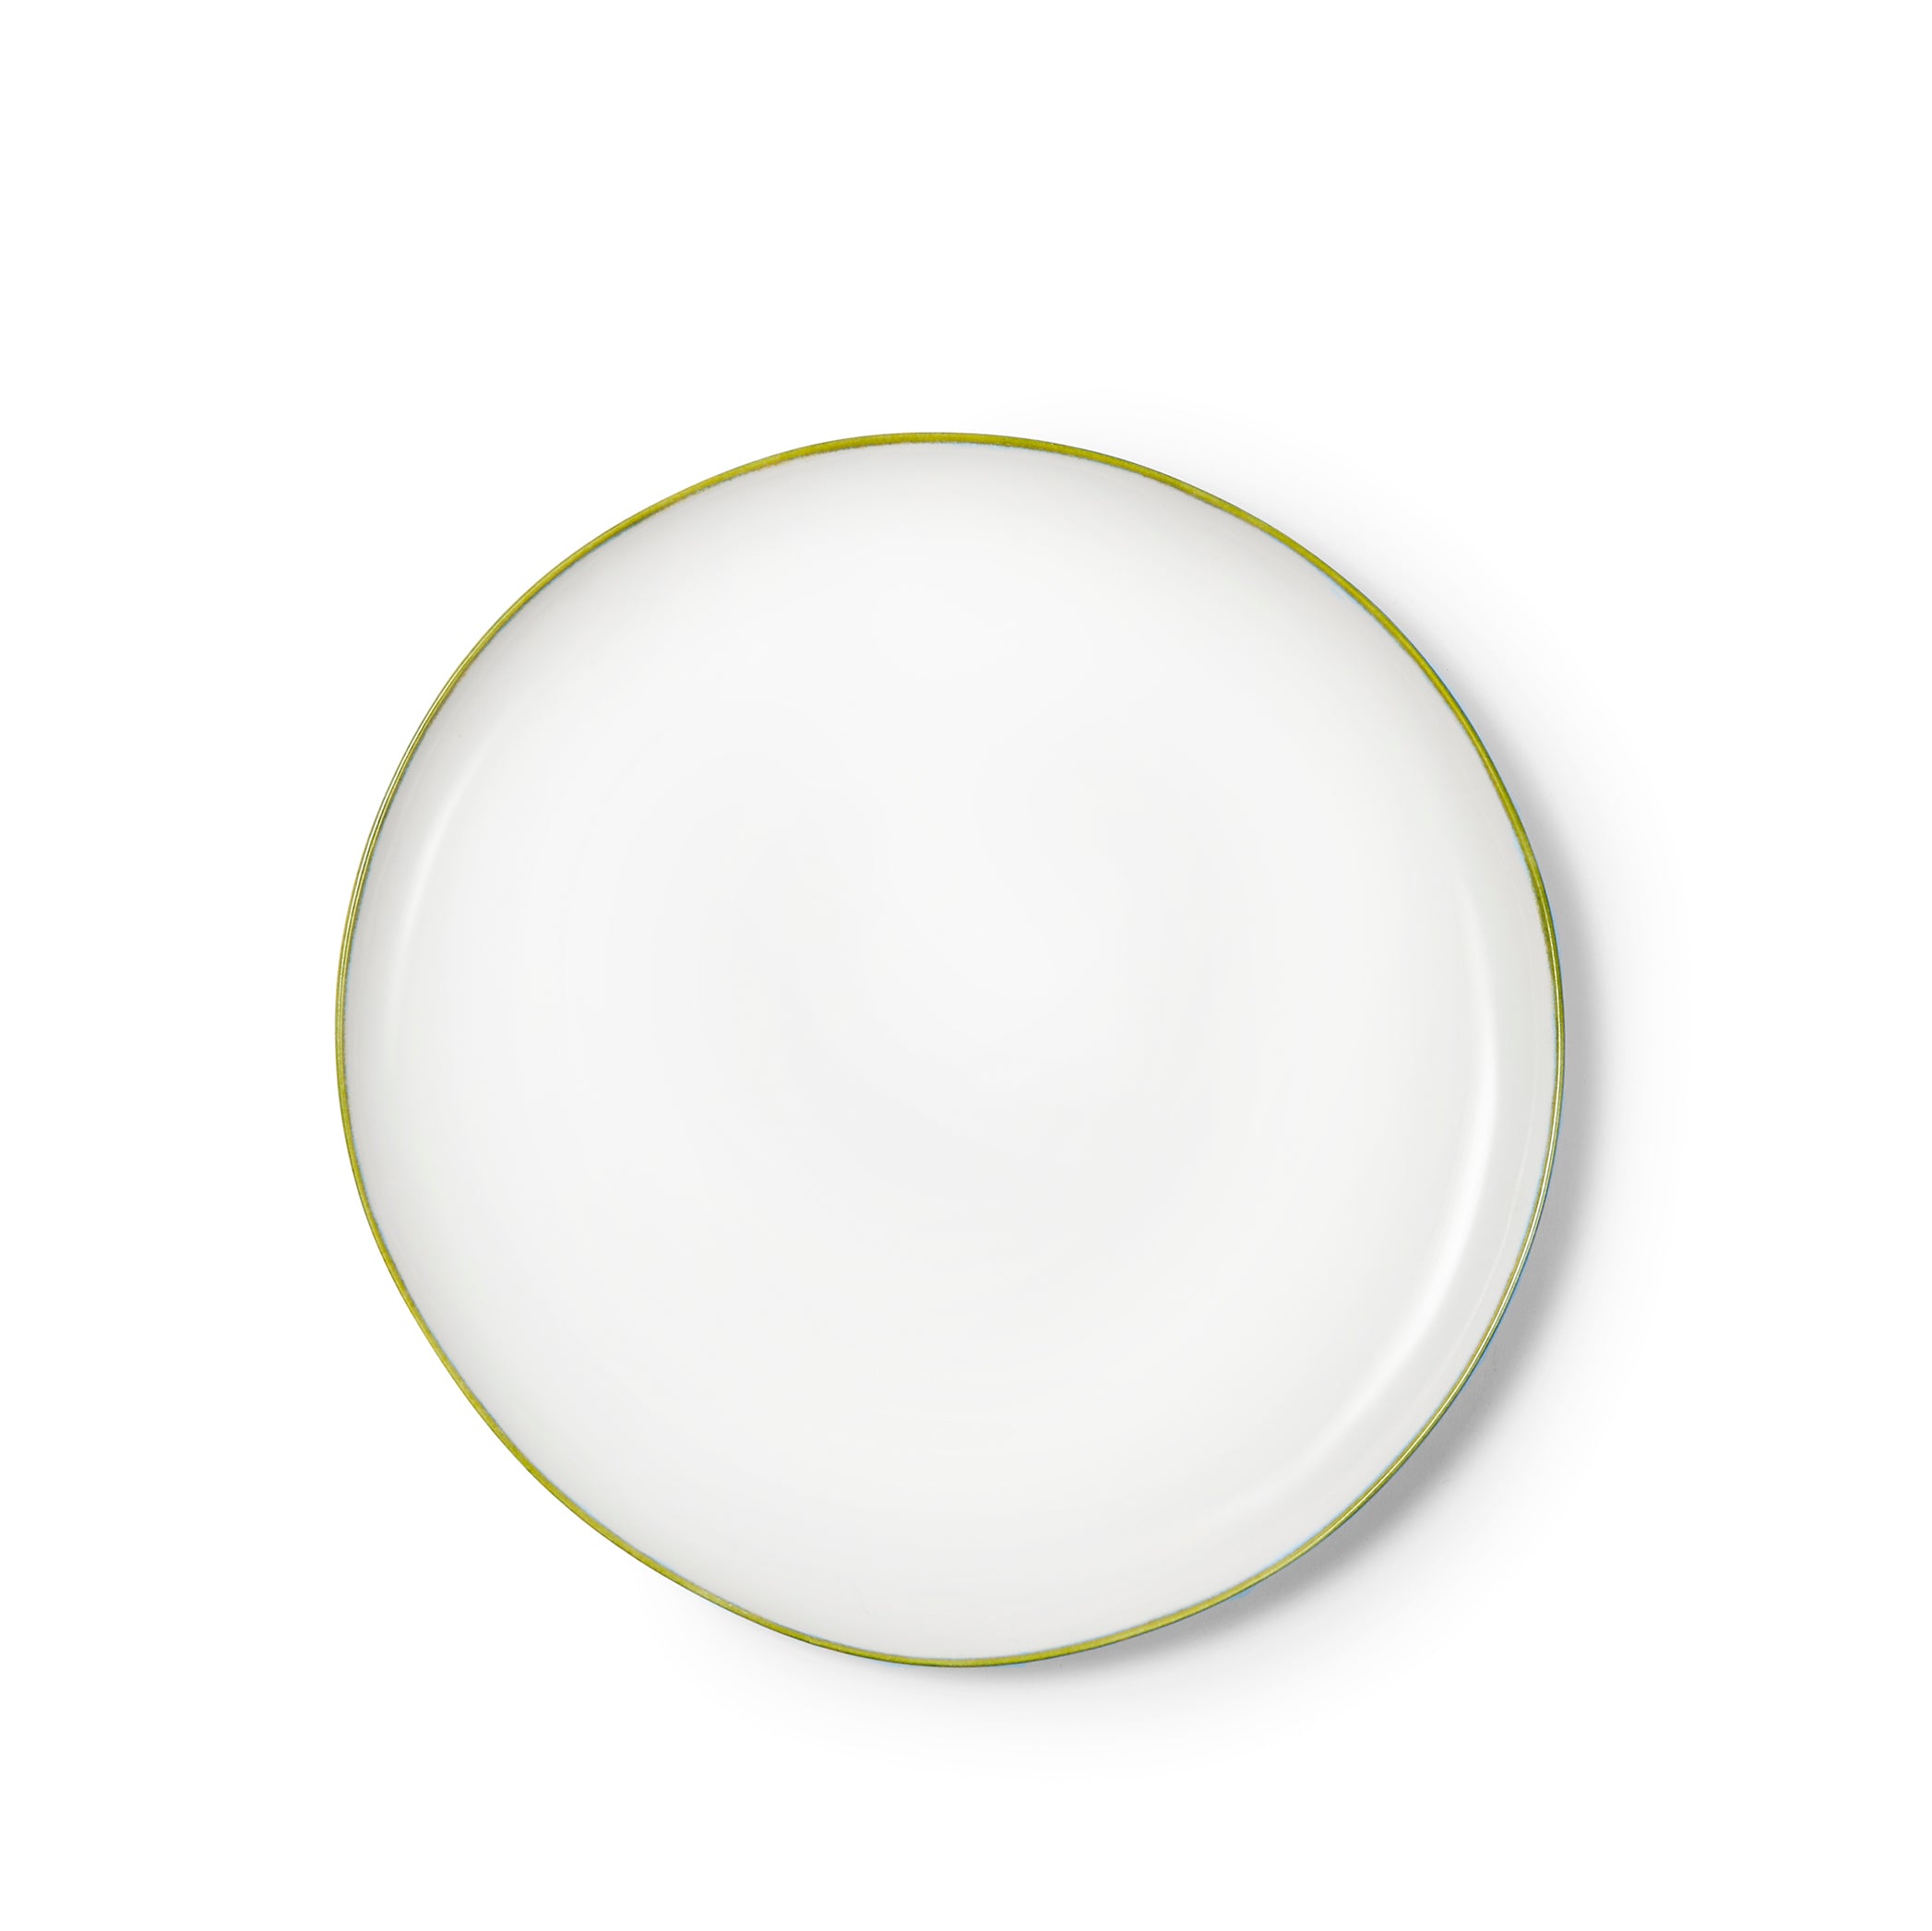 Made to order - Summerill & Bishop Handmade 31cm Porcelain Dinner Plate with Green Rim